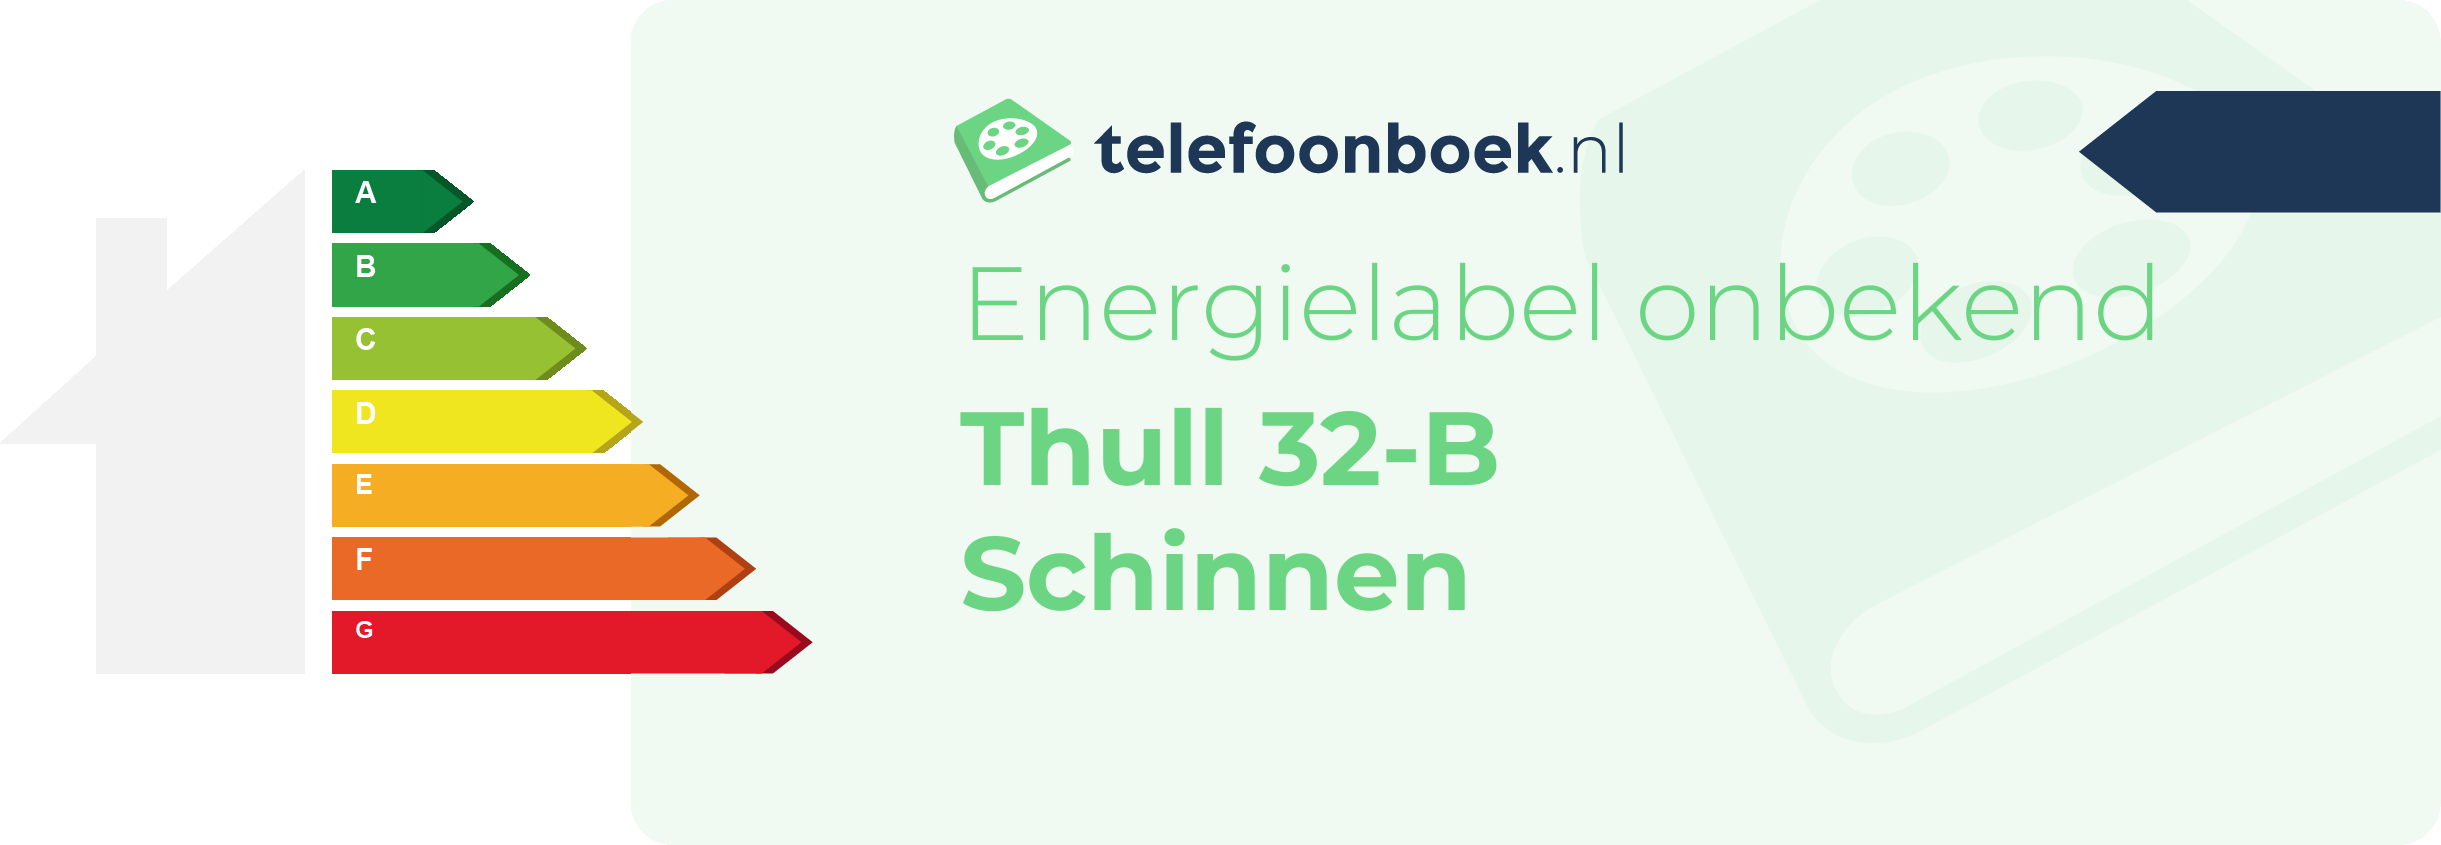 Energielabel Thull 32-B Schinnen